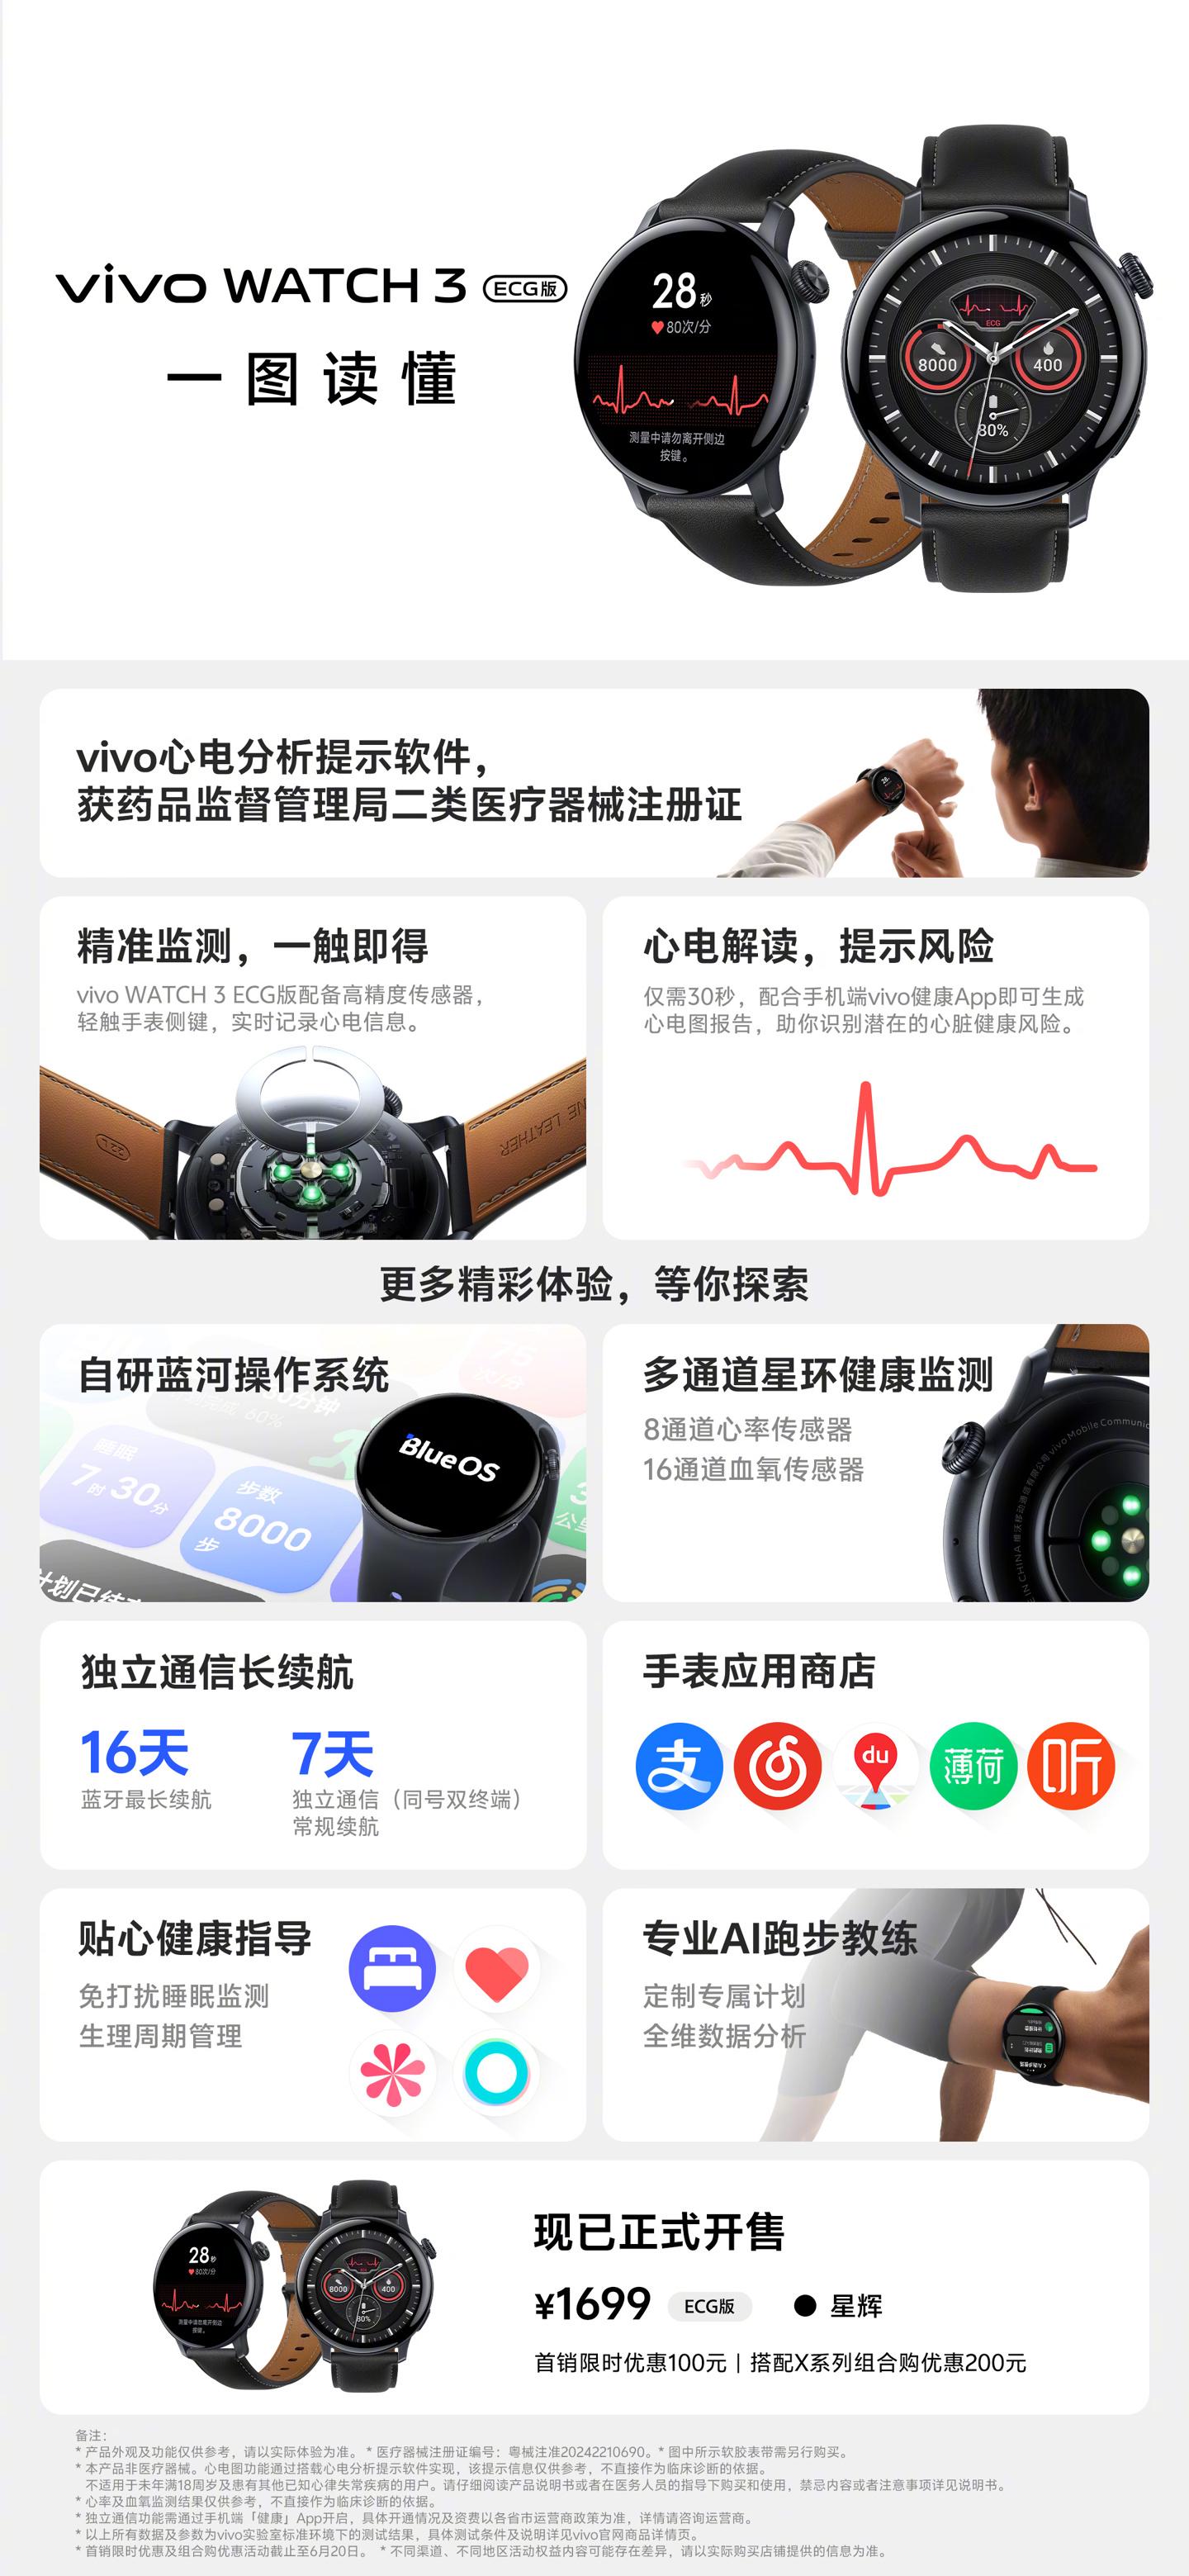 vivo WATCH 3 ECG 版智能手表开售：30 秒心电分析提示，1599 元 第1张